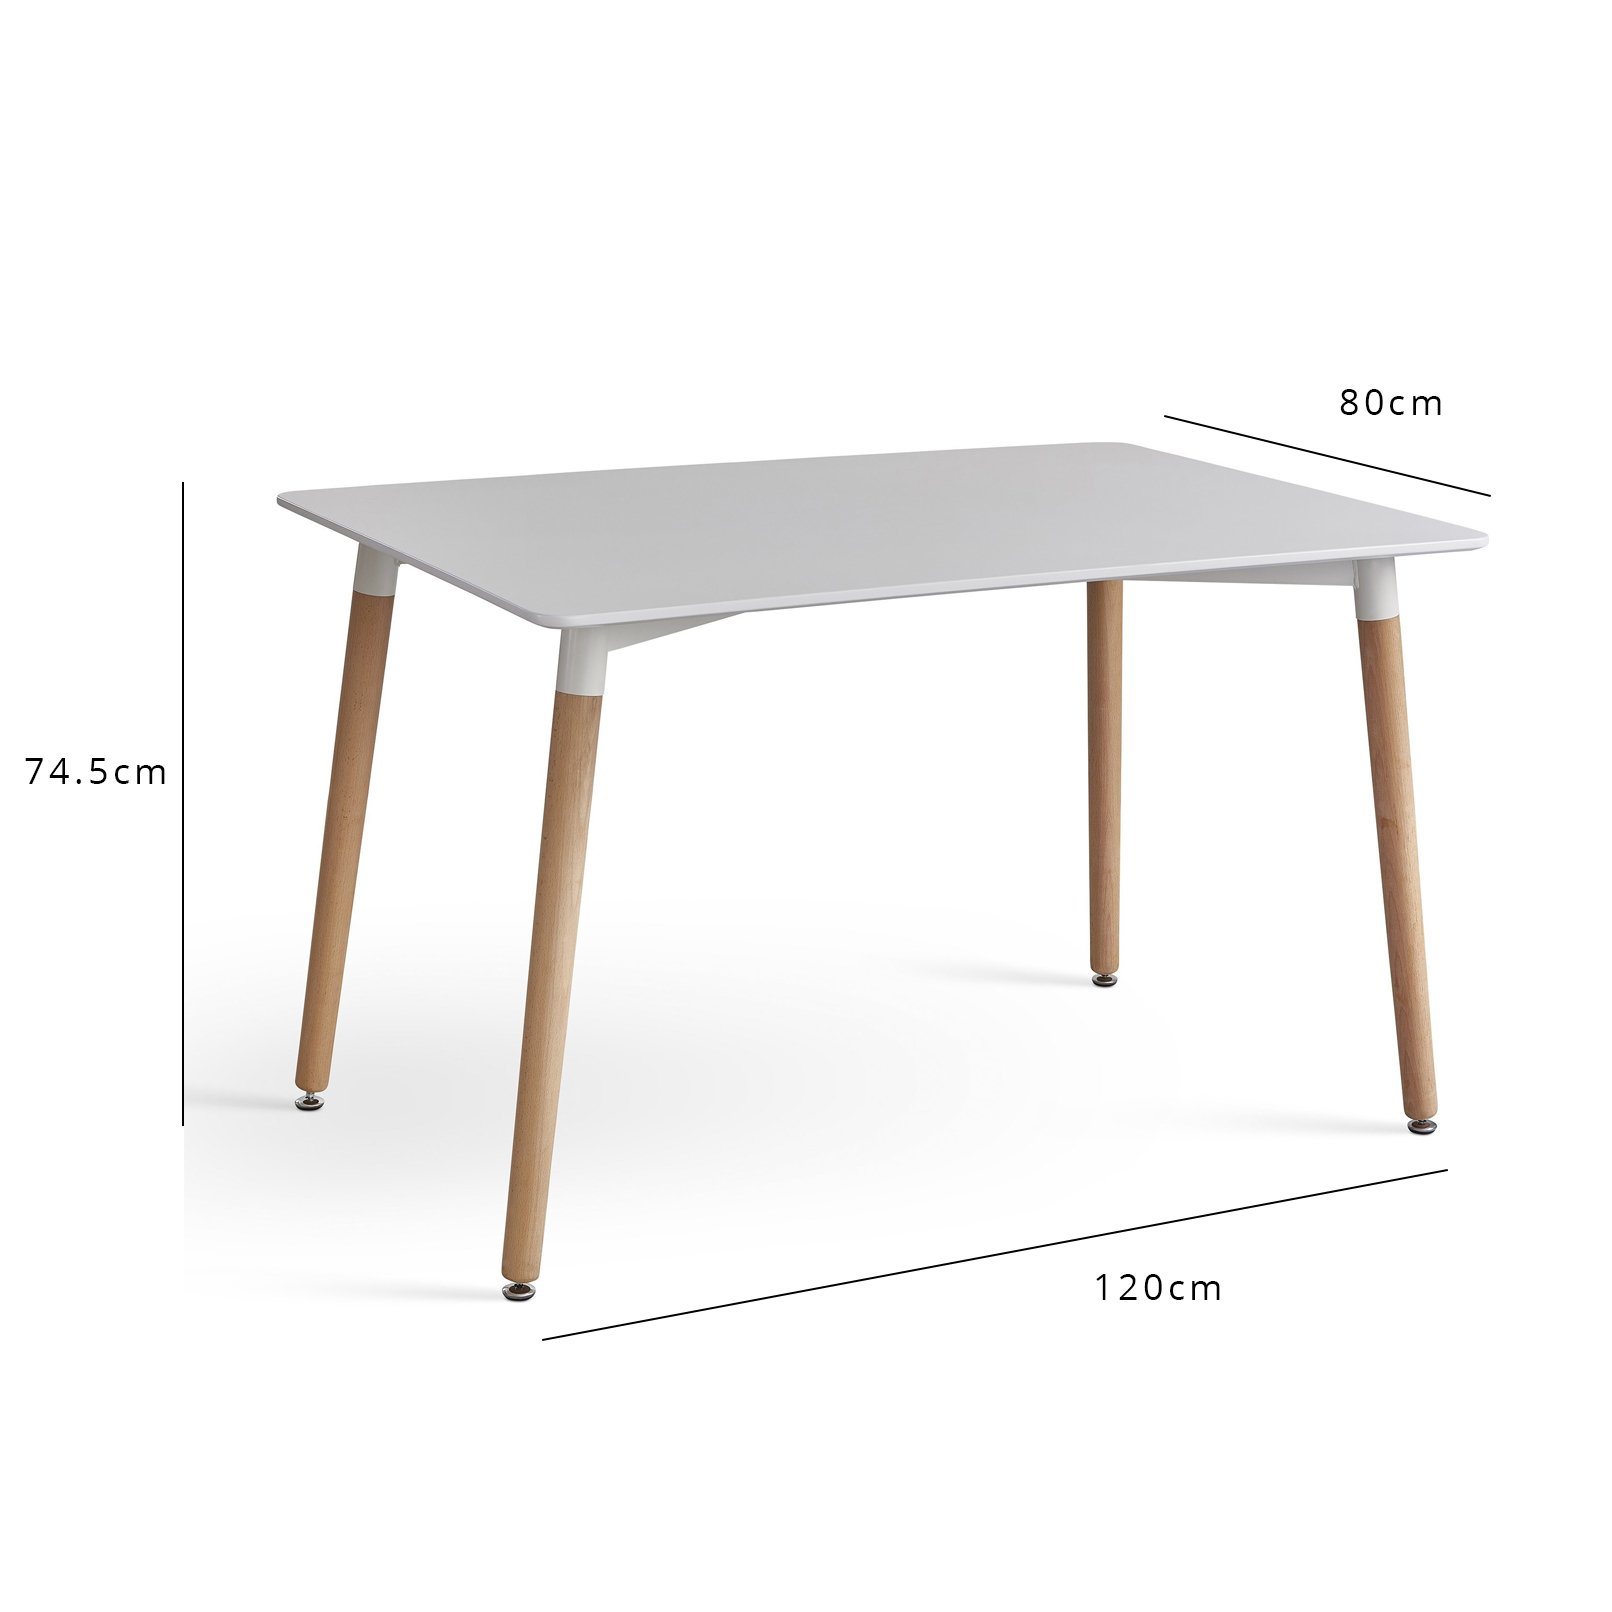 Finn Kitchen Table 120cm